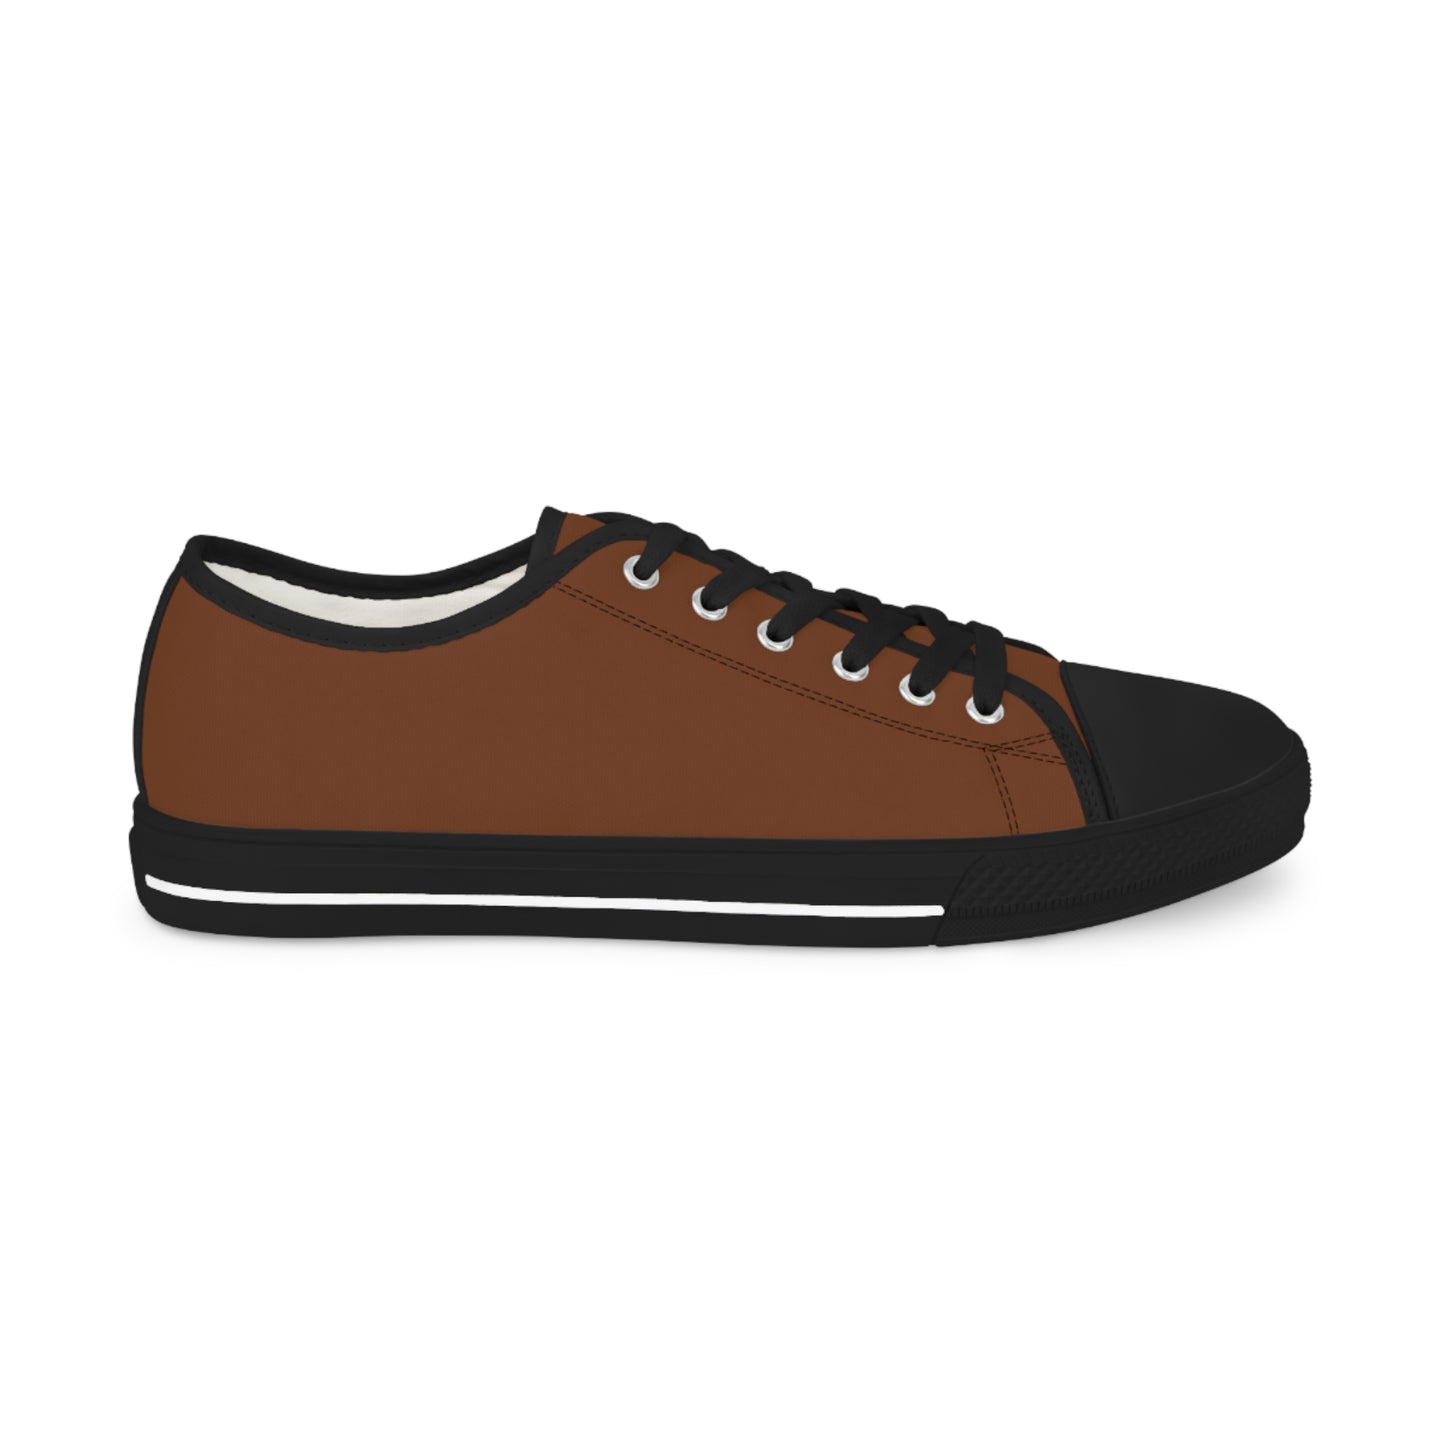 Men's Canvas Low Top Solid Color Sneakers - Rotten Orange US 14 Black sole